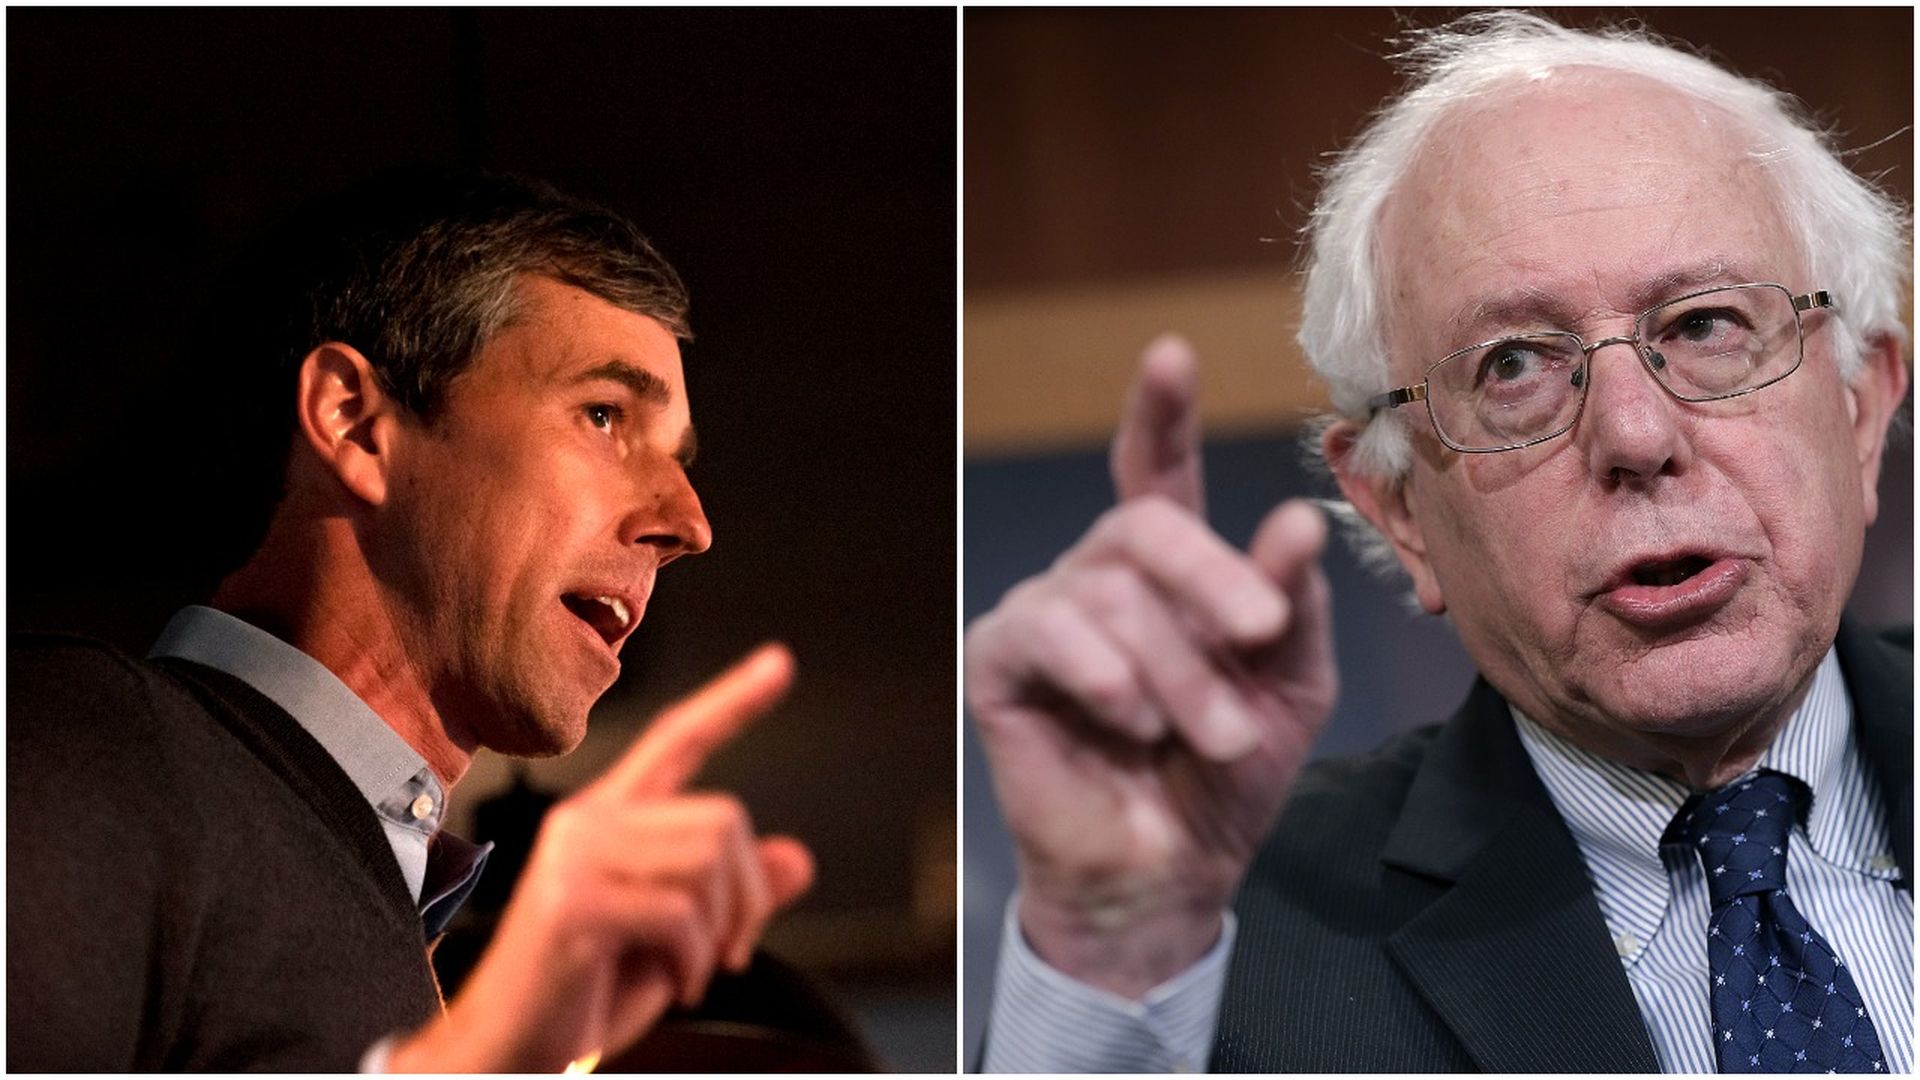 This is a two-way split screen between Bernie Sanders and Beto O'Rourke 